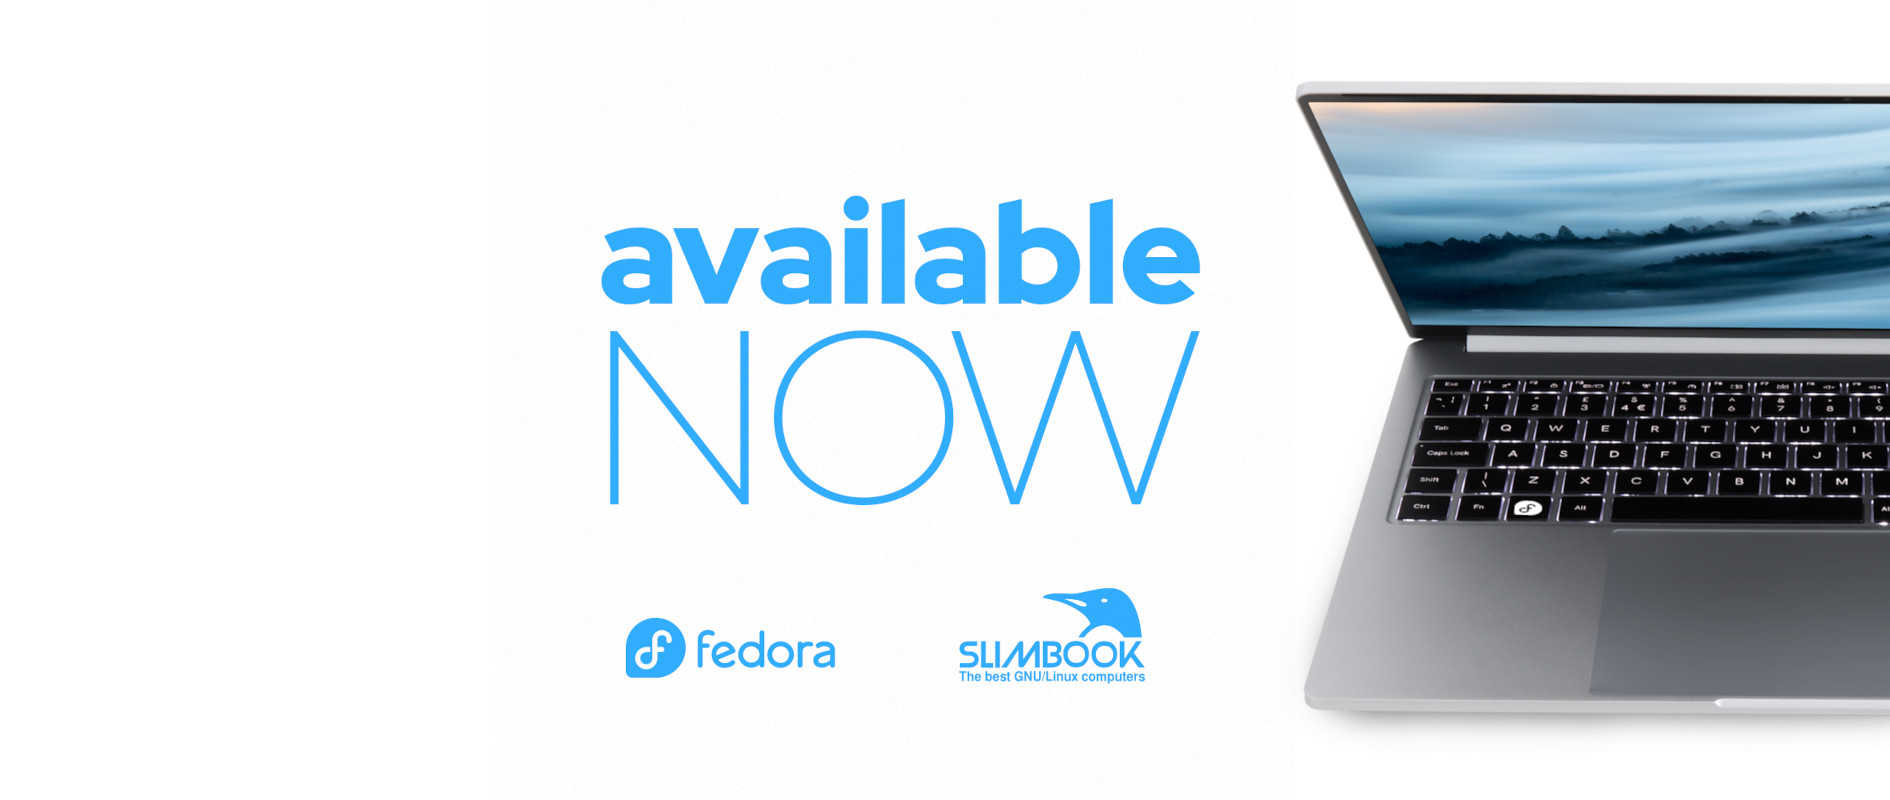 Fedora Project and Slimbook Collaborate to Deliver New Fedora Slimbook Ultrabook - Fedora Magazine